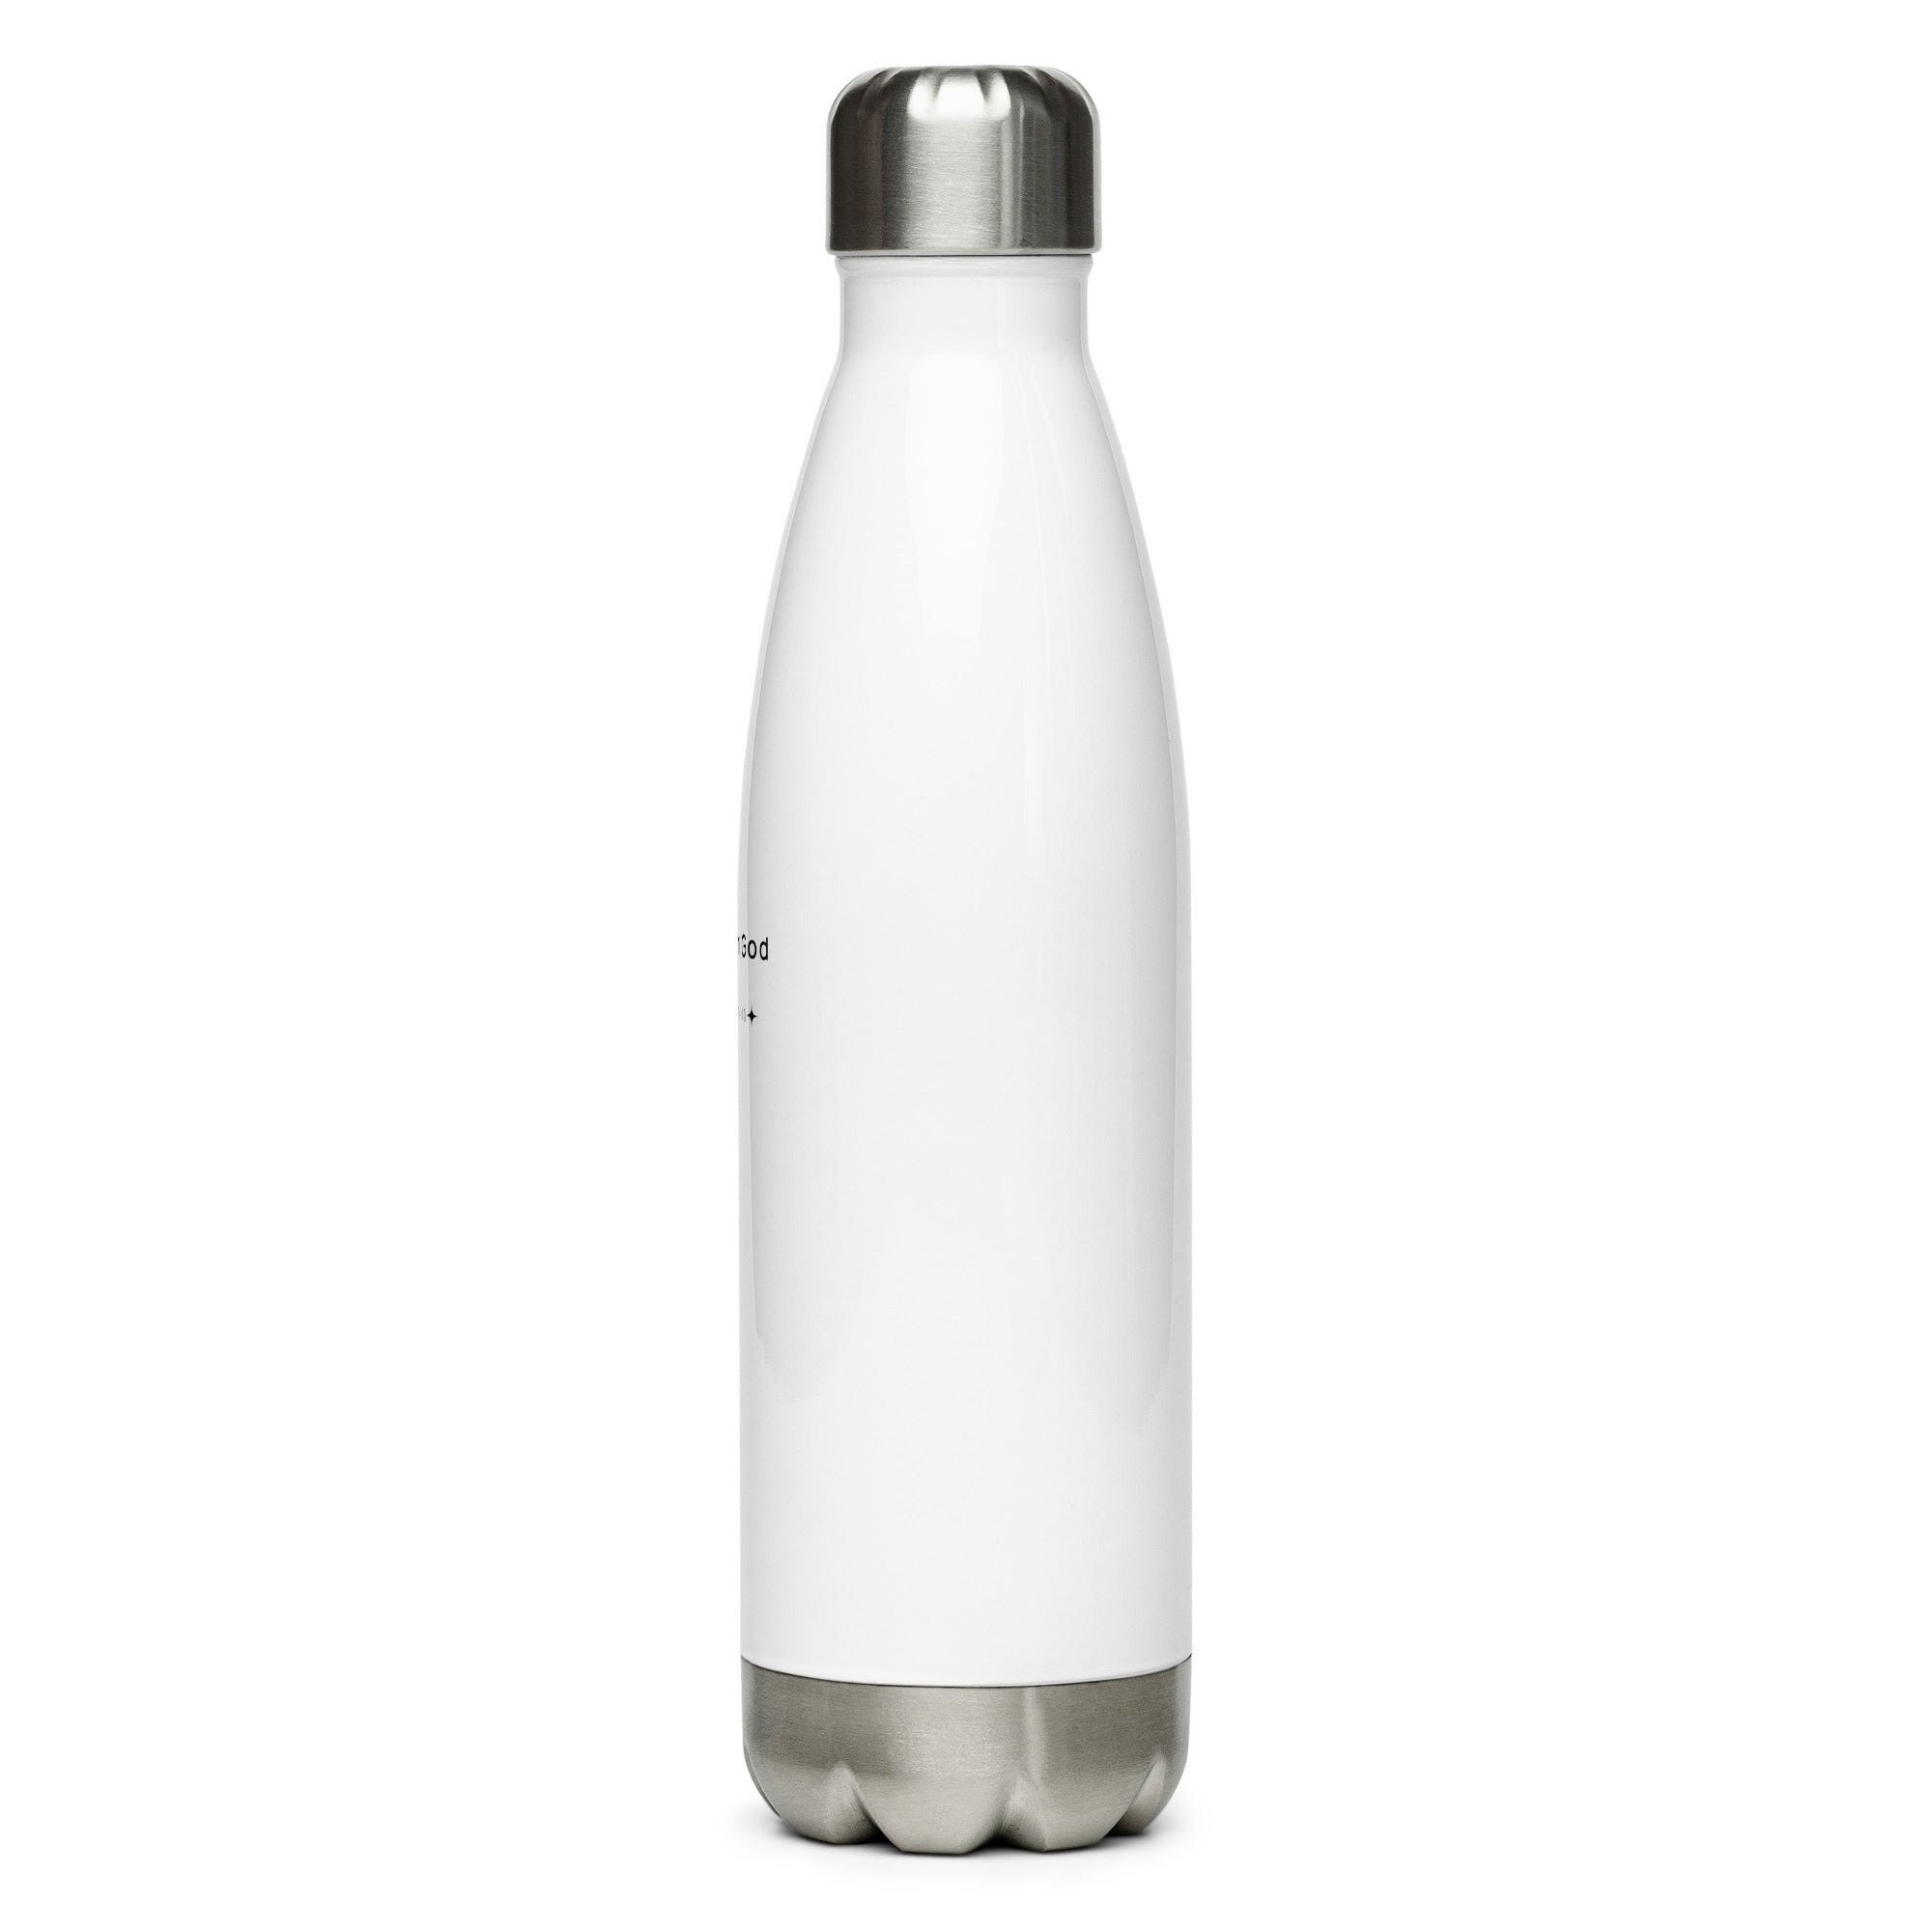 Stainless steel water bottle - John 14:10